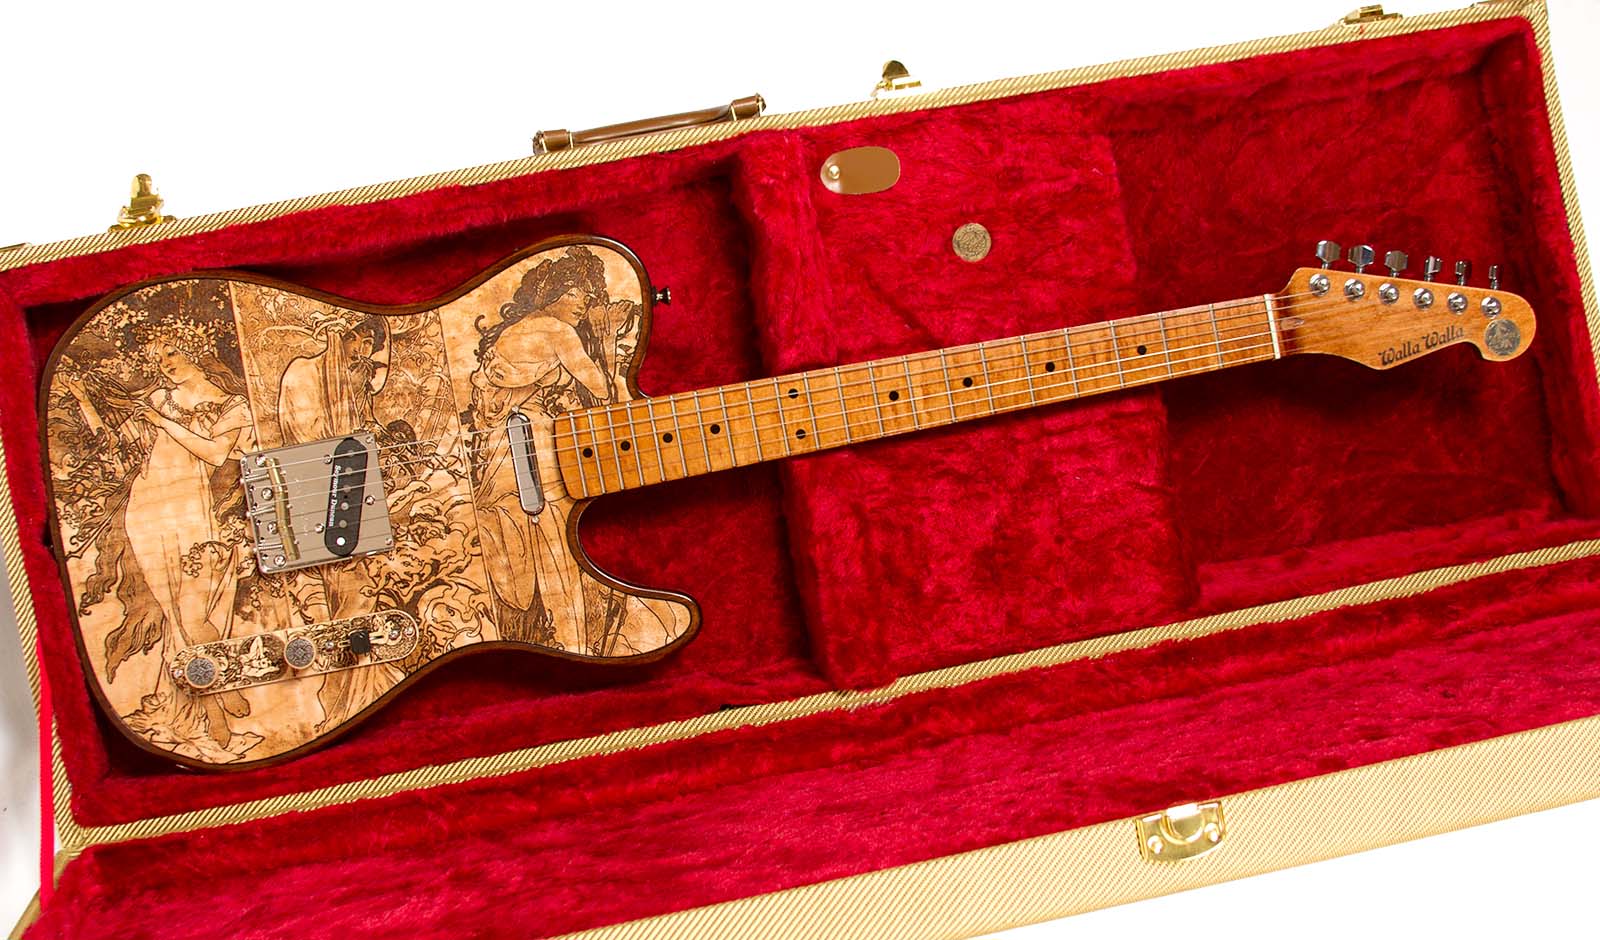 Mucha Laser Engraved Guitar Article Image